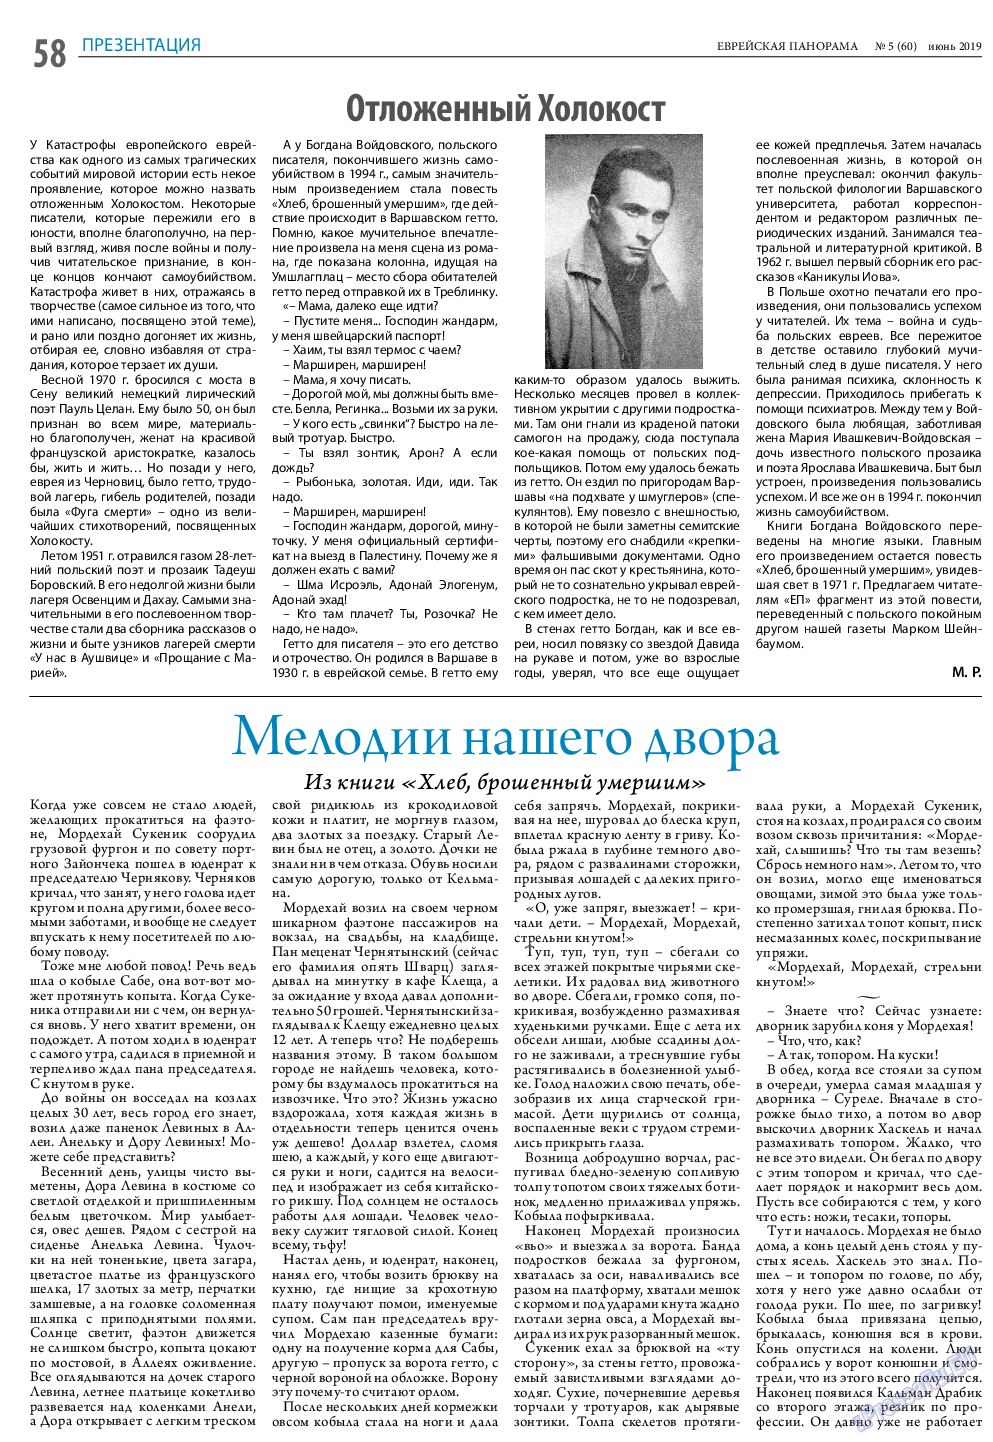 Еврейская панорама, газета. 2019 №6 стр.58